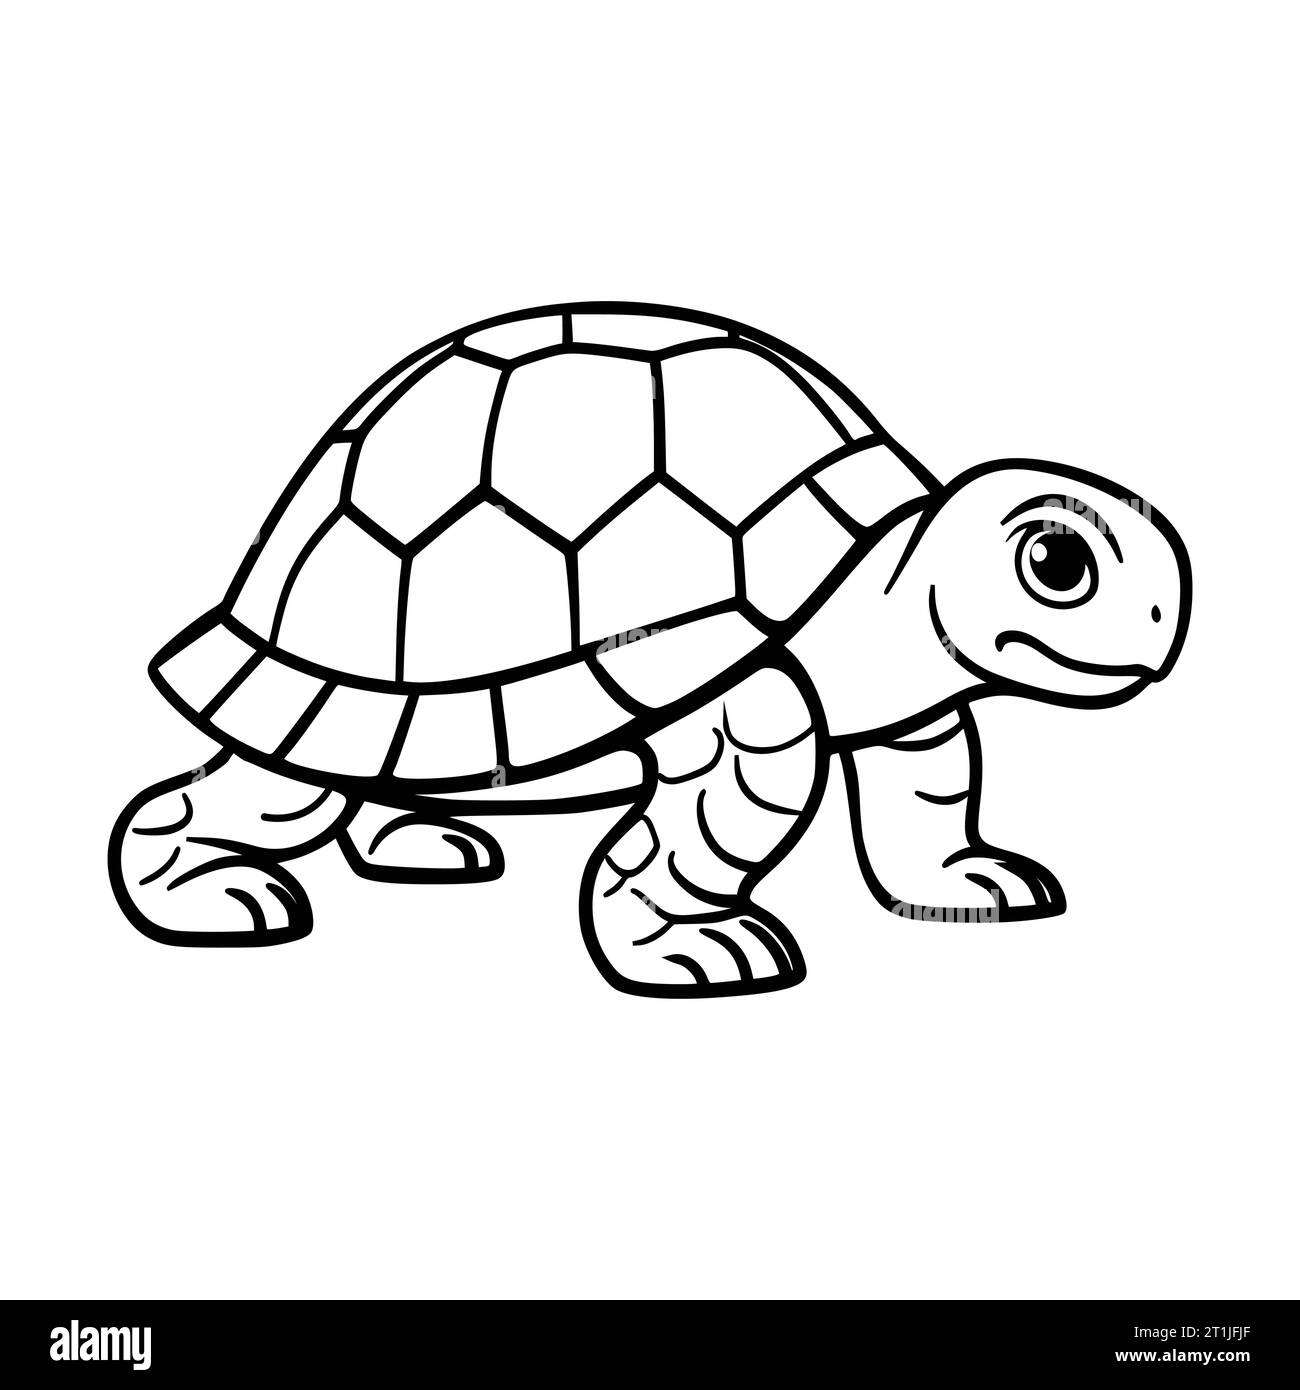 turtle amphibian wild animal head illustration for logo or symbol Stock Vector